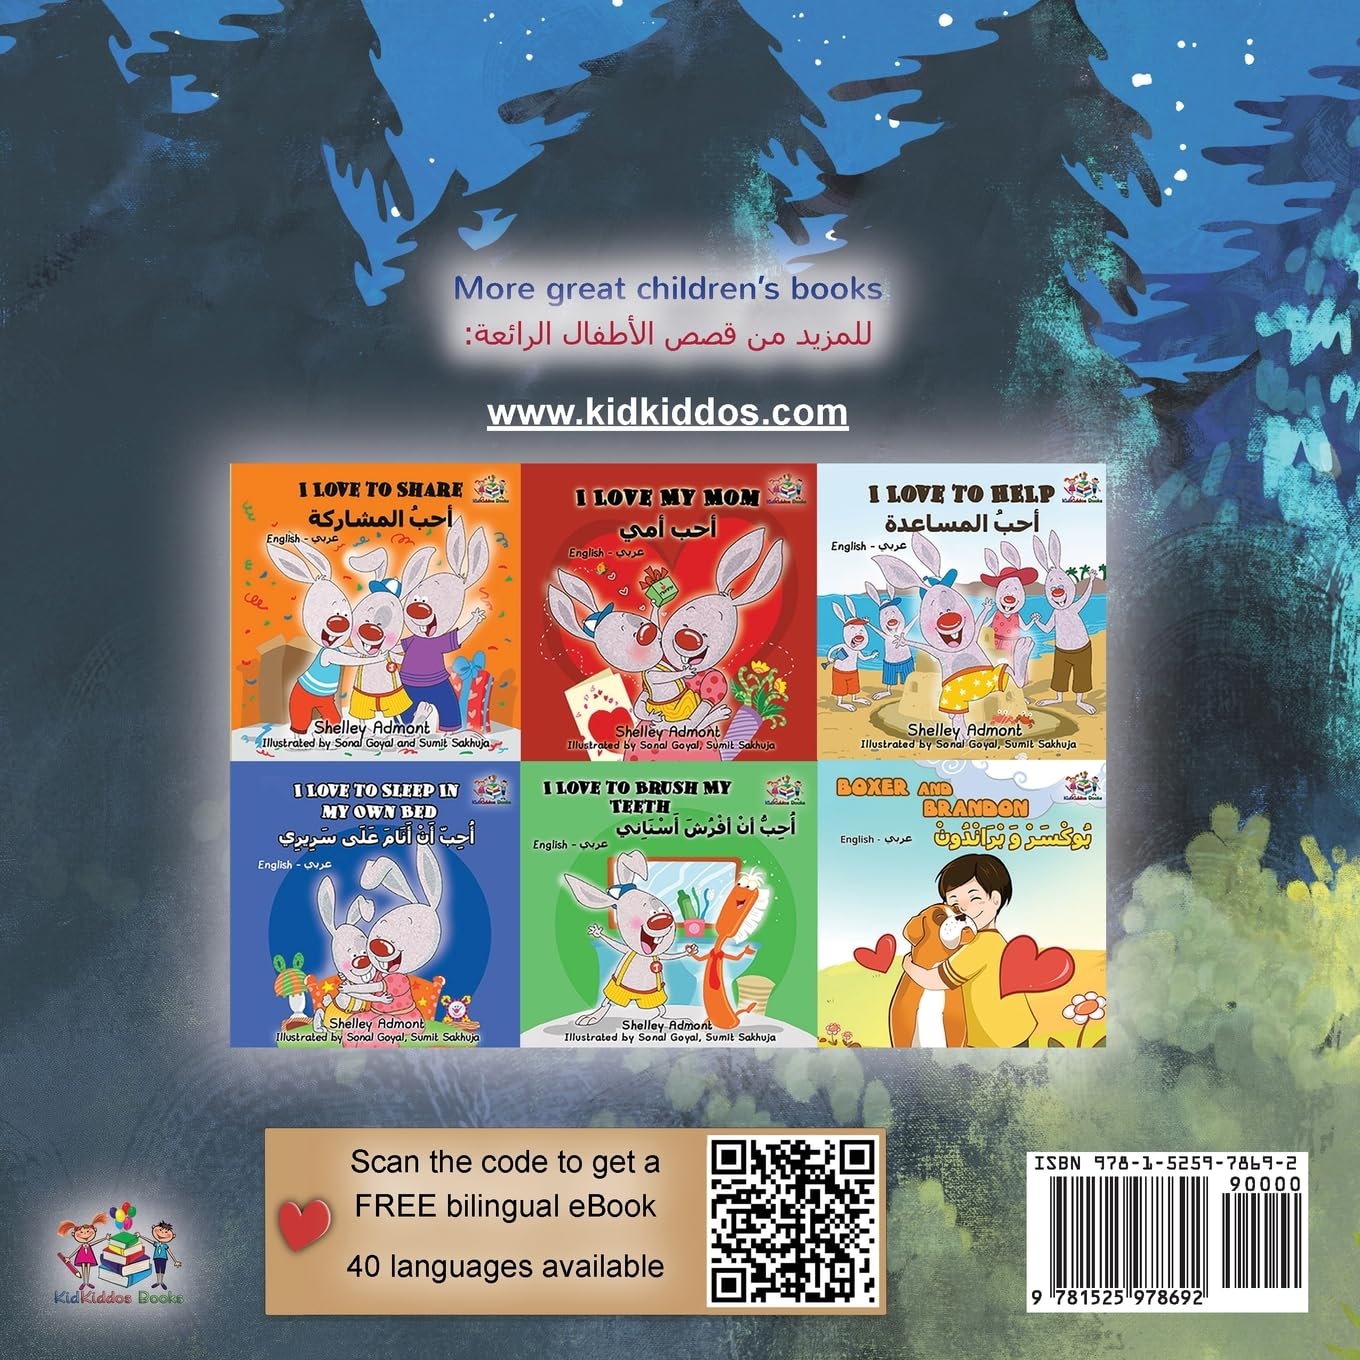 Under the Stars (English Arabic Bilingual Kid's Book): Bilingual children's book (English Arabic Bilingual Collection) (Arabic Edition)